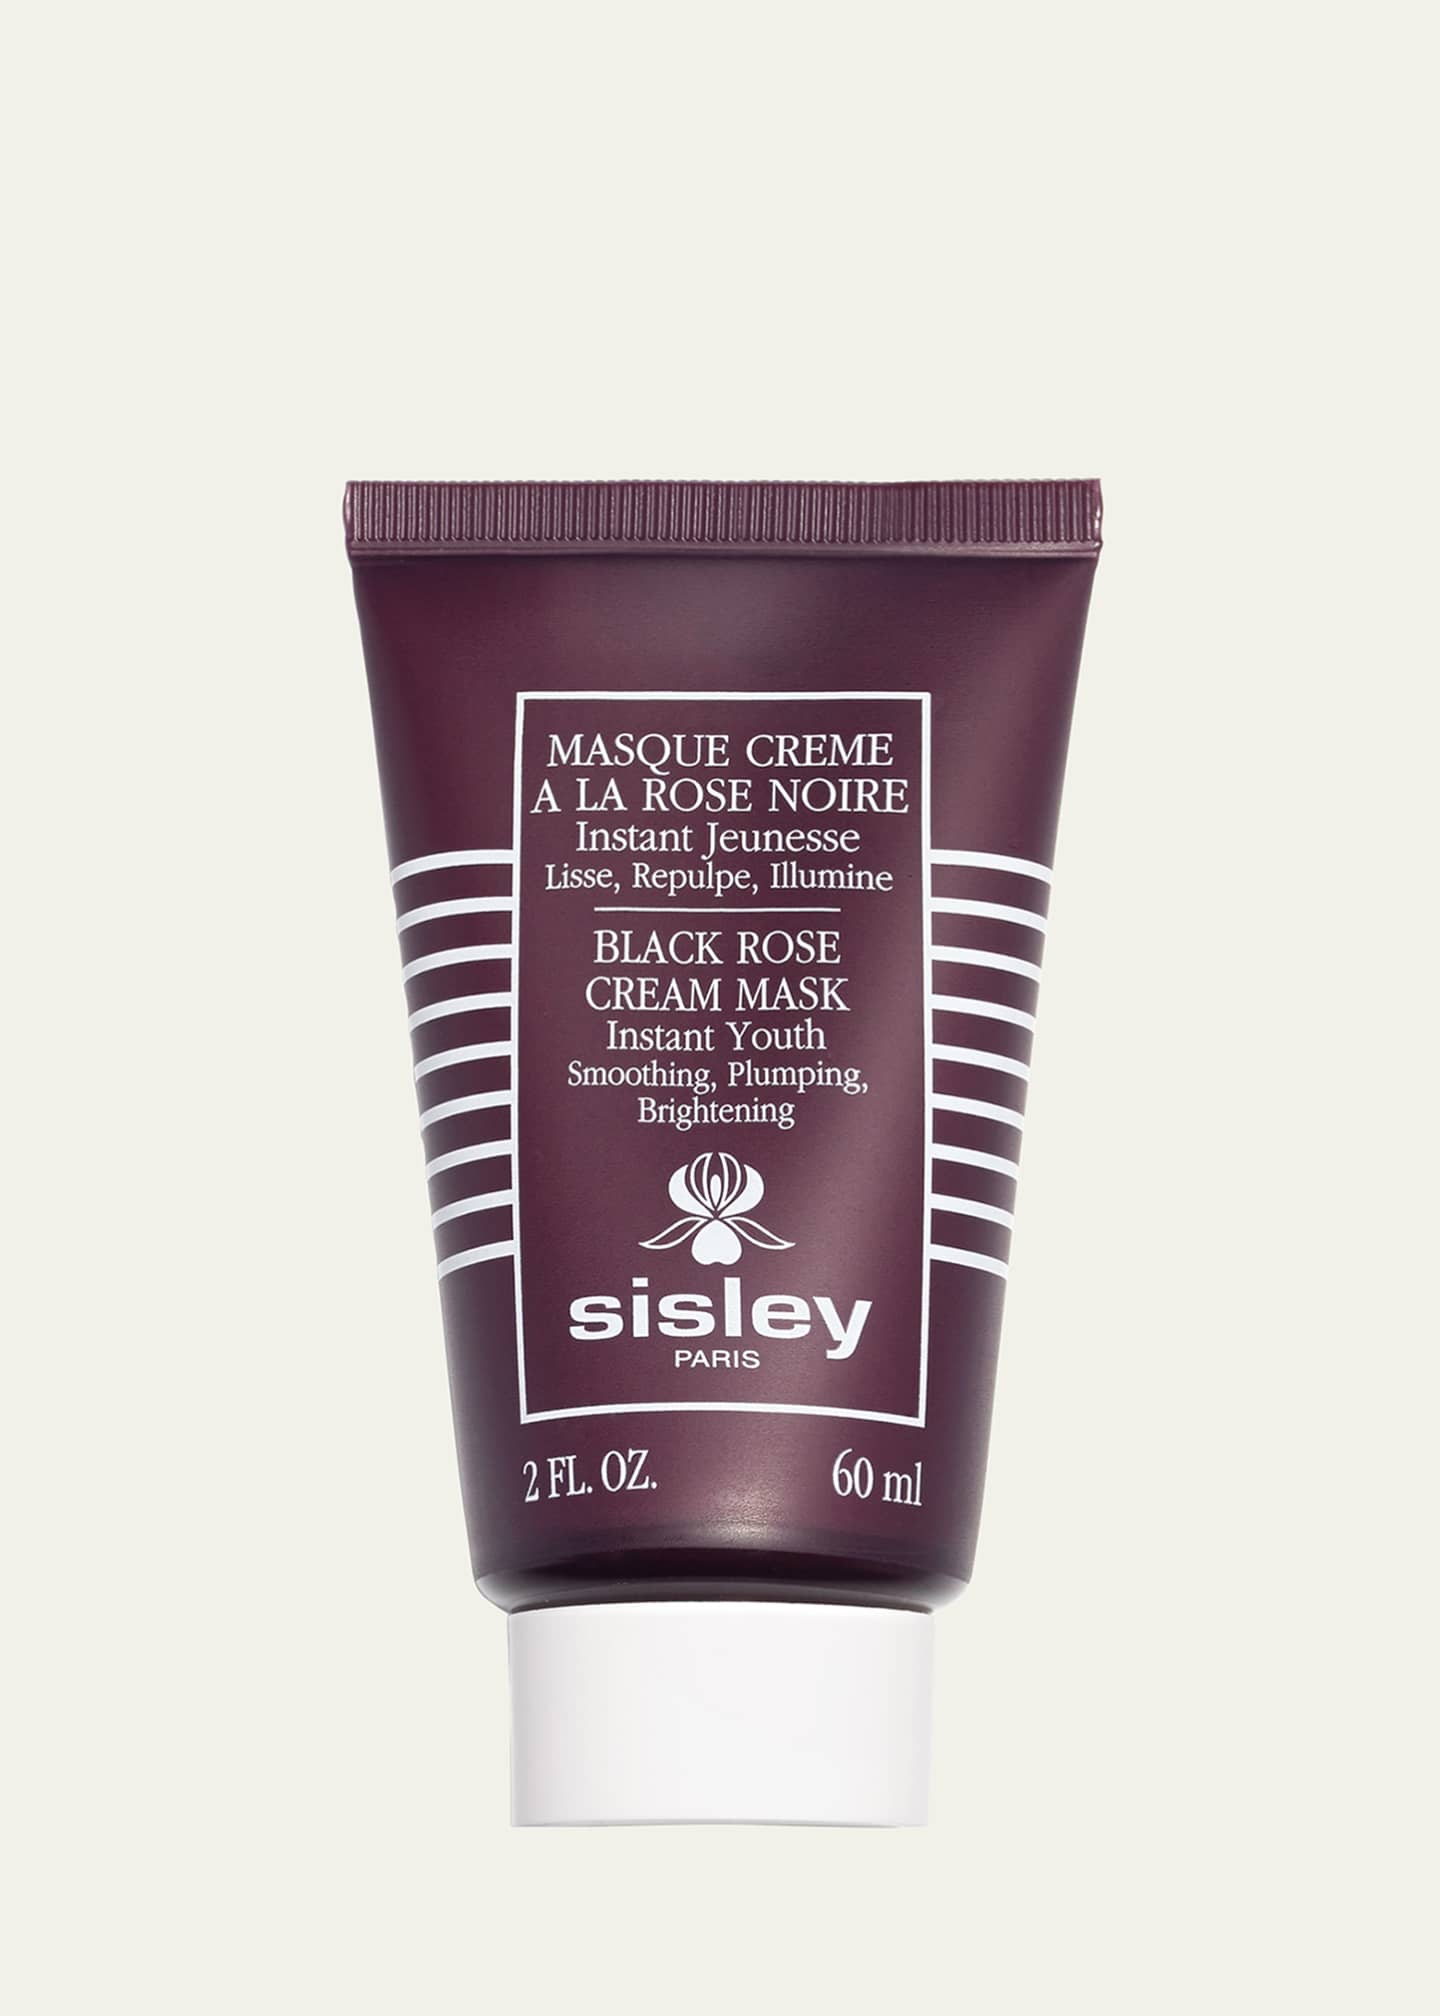 Sisley-Paris Black Rose Cream Mask, 2.1 oz. Image 1 of 3